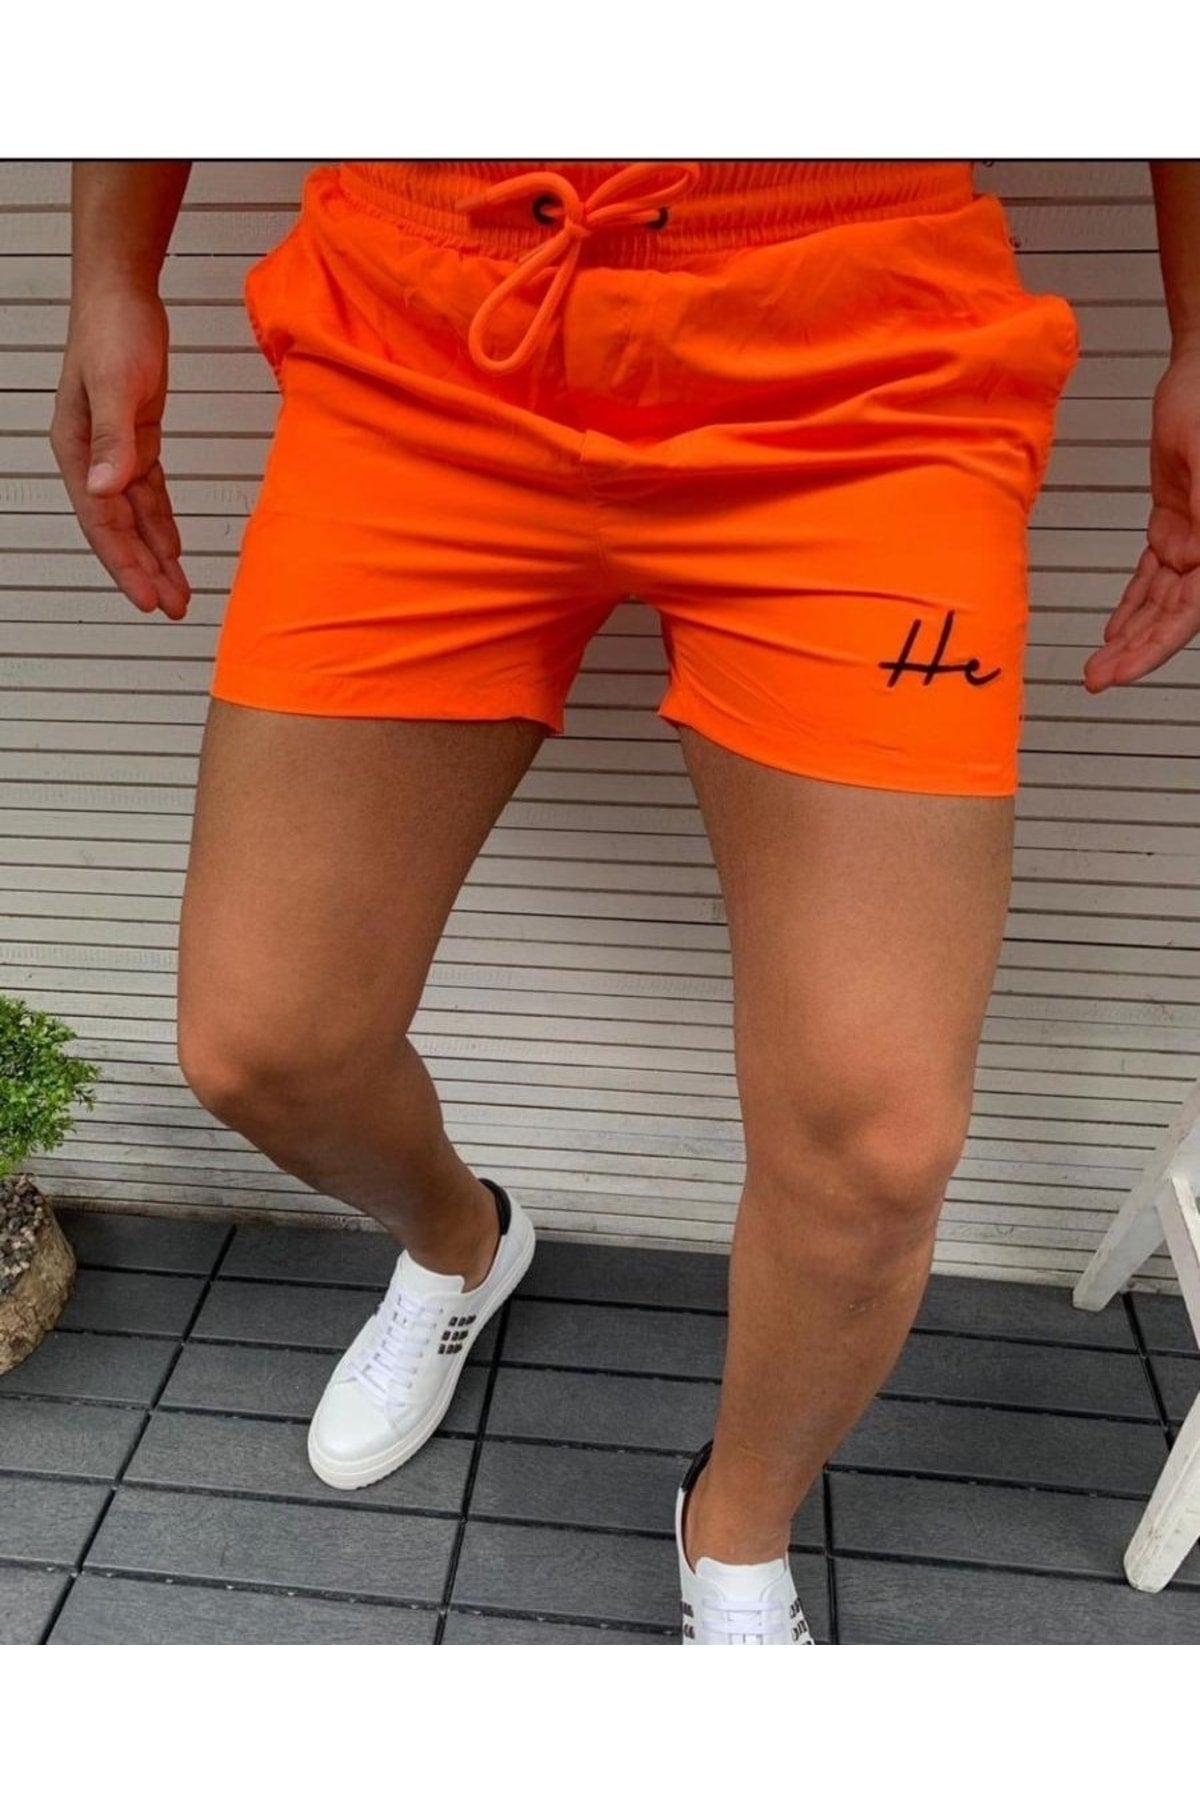 Men's Neon Orange Solid Color Pocket Model Marine Shorts Swimsuit